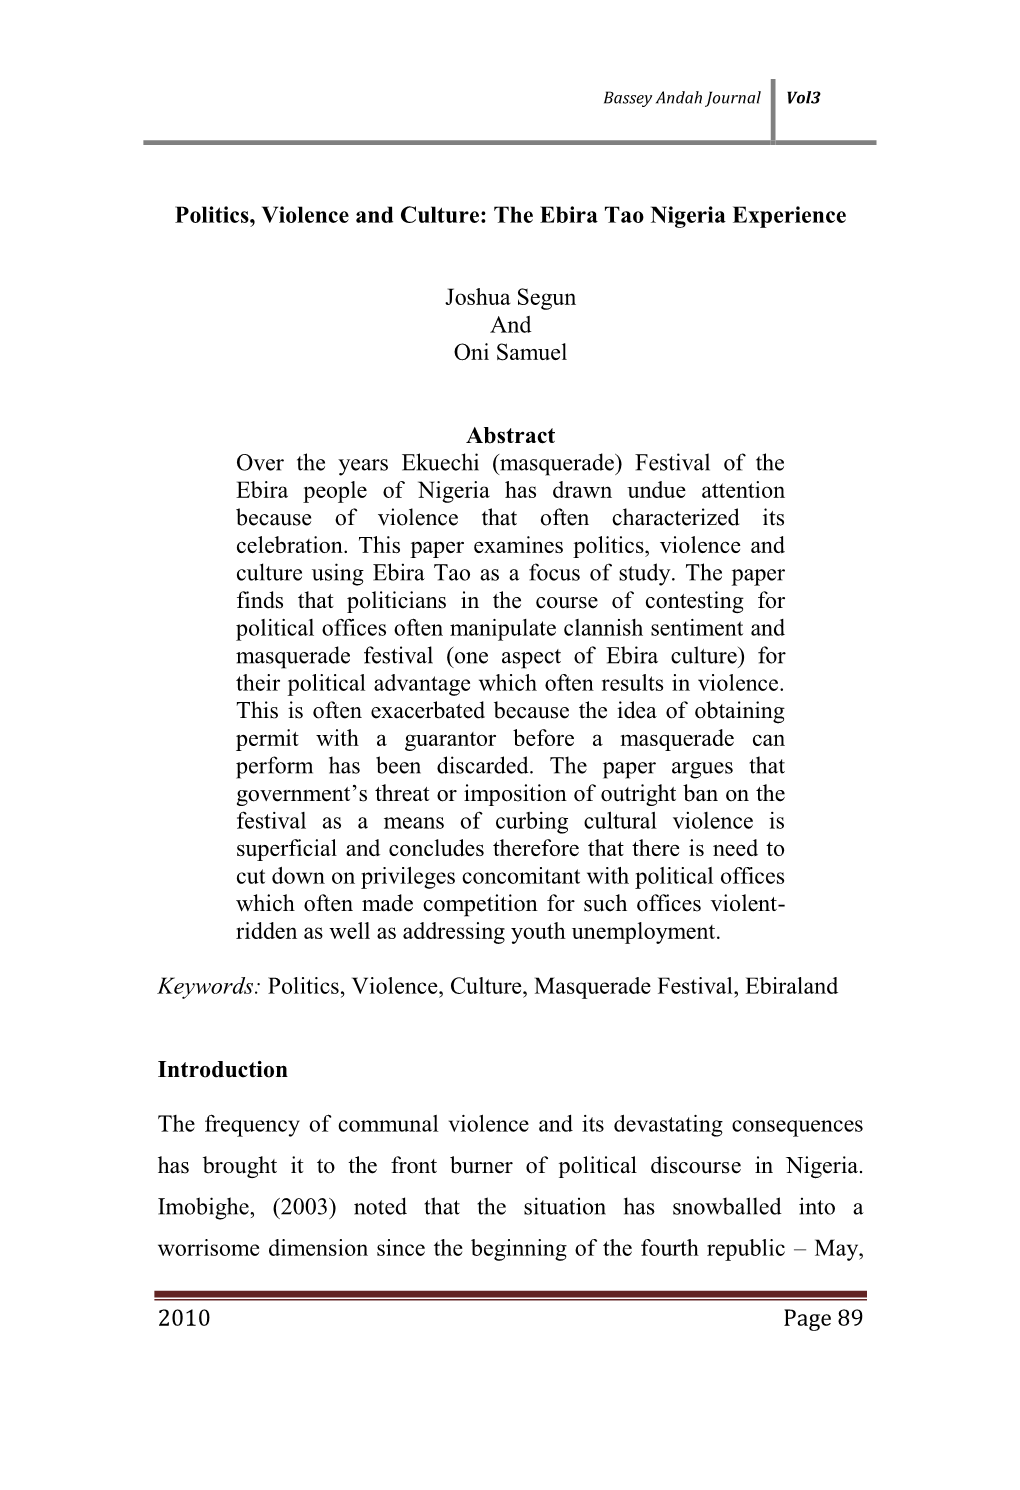 Politics, Violence and Culture: the Ebira Tao Nigeria Experience